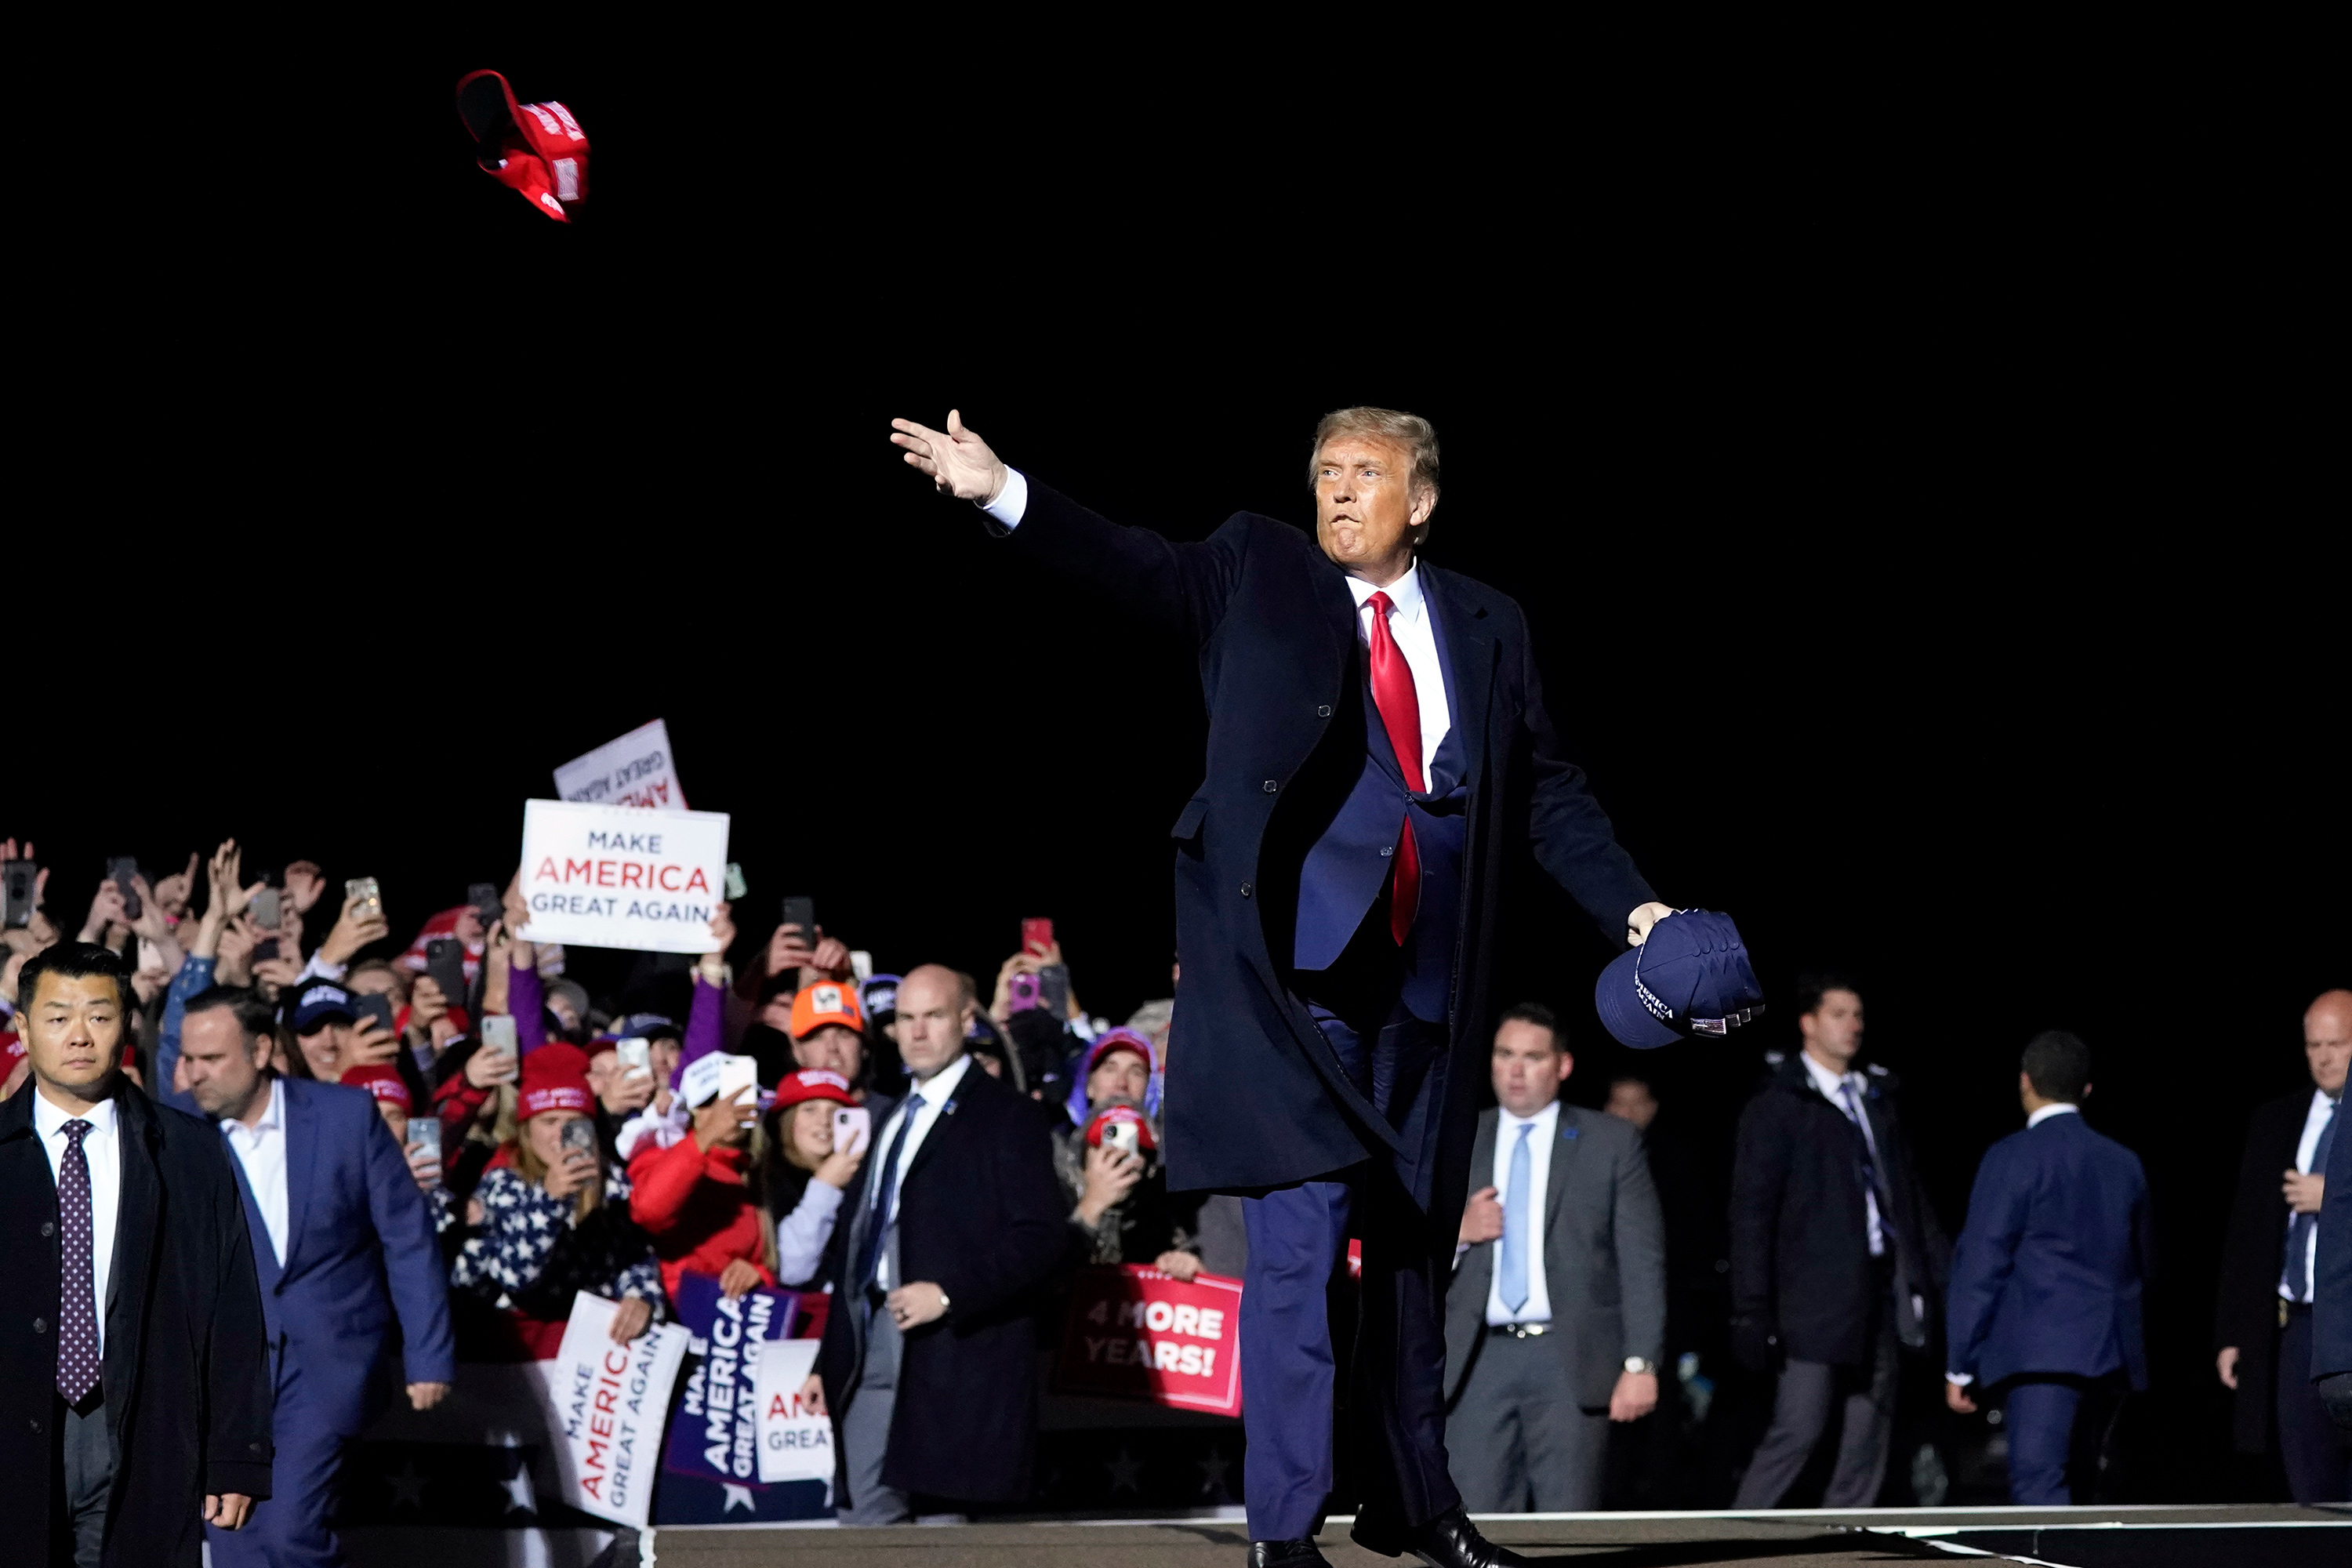 trump throwing hats into crowd